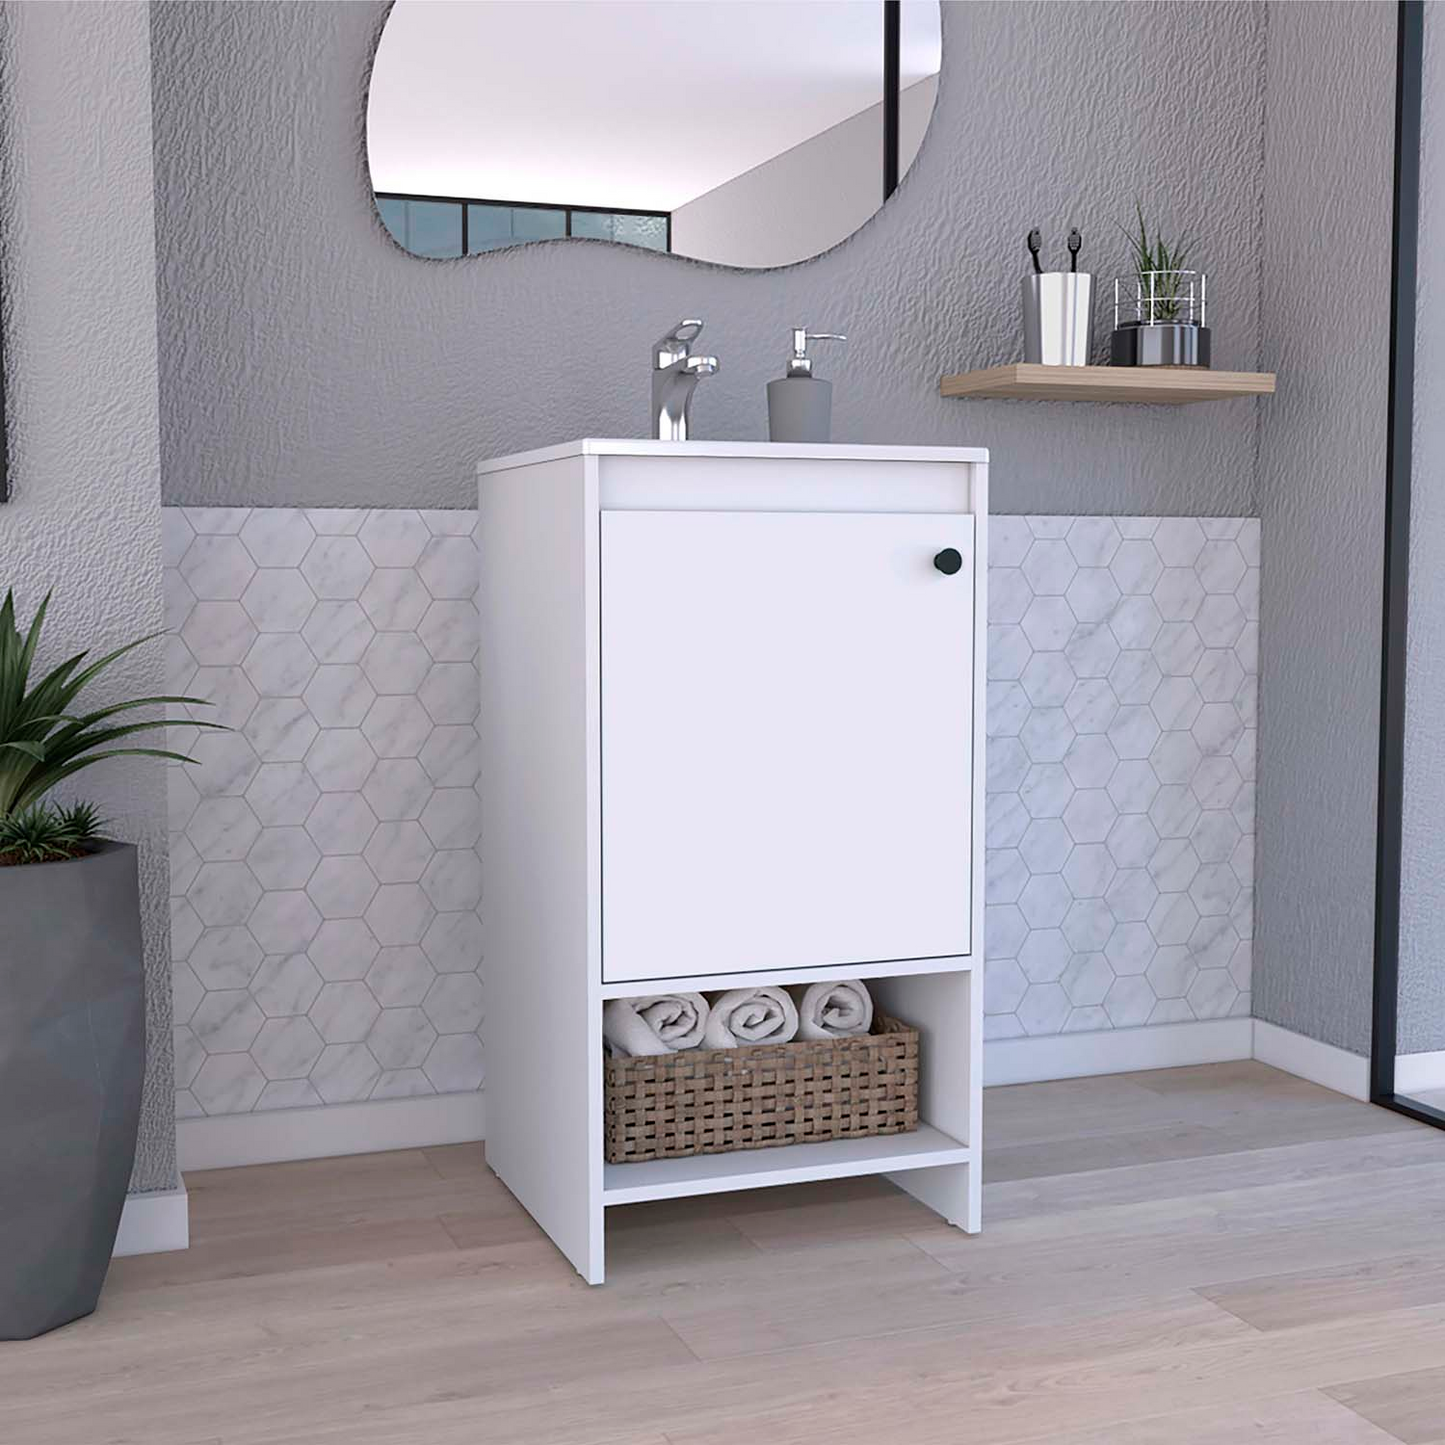 Bravos Bathroom Vanity, Sink, Two Shelves, Single Door Cabinet